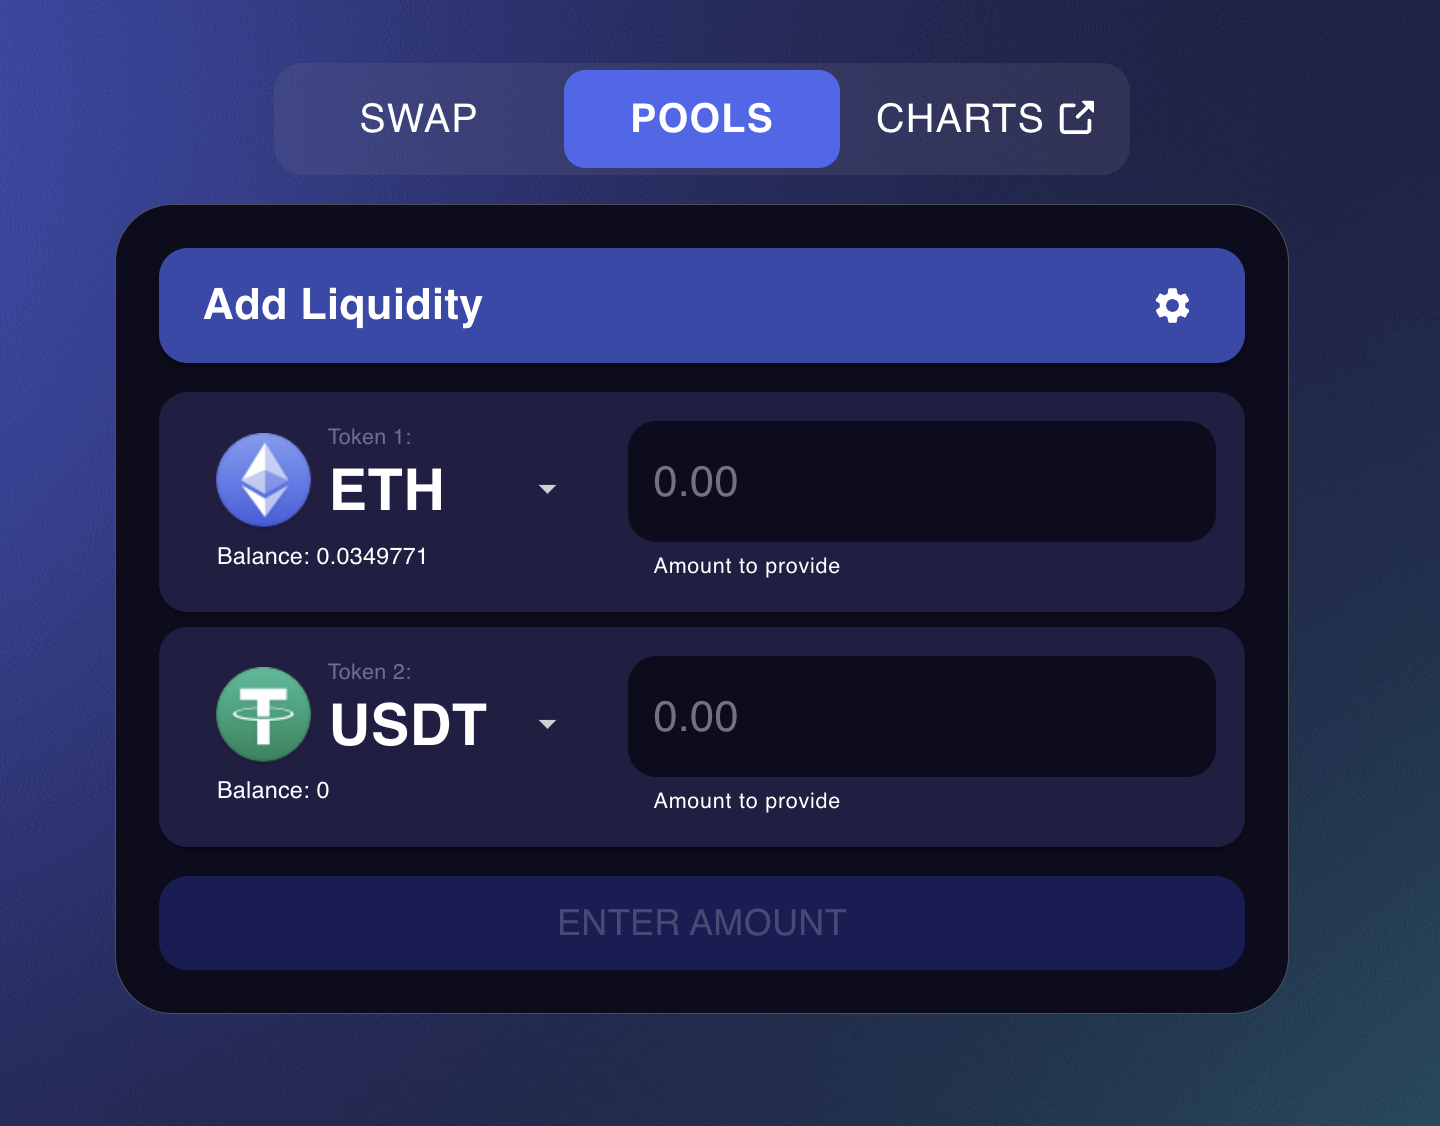 mySwap - Add Liquidity